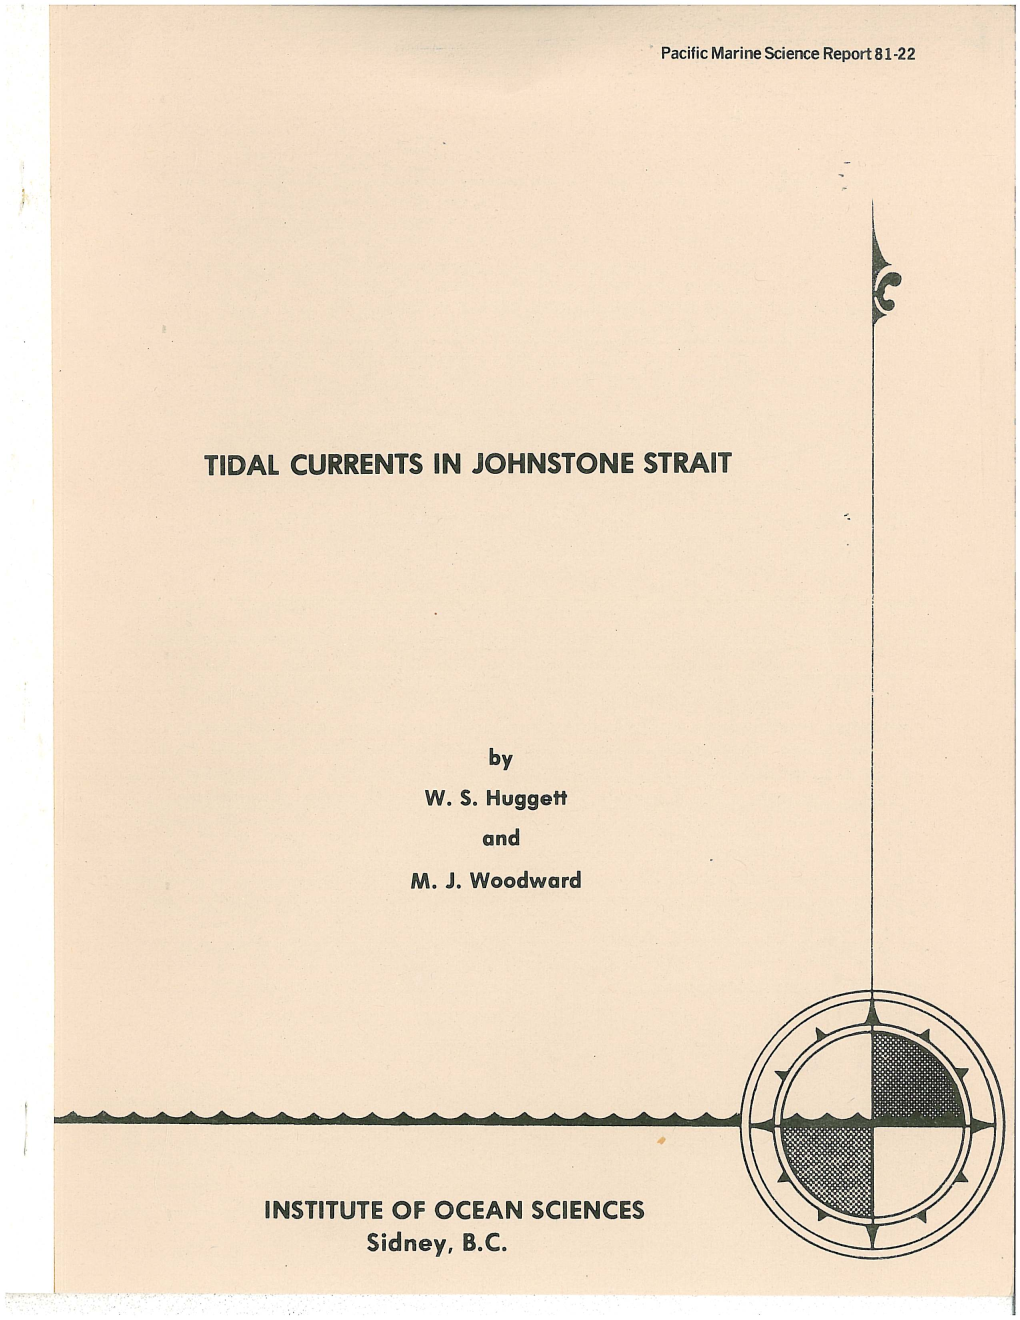 Tidal Currents in Johnstone Strait